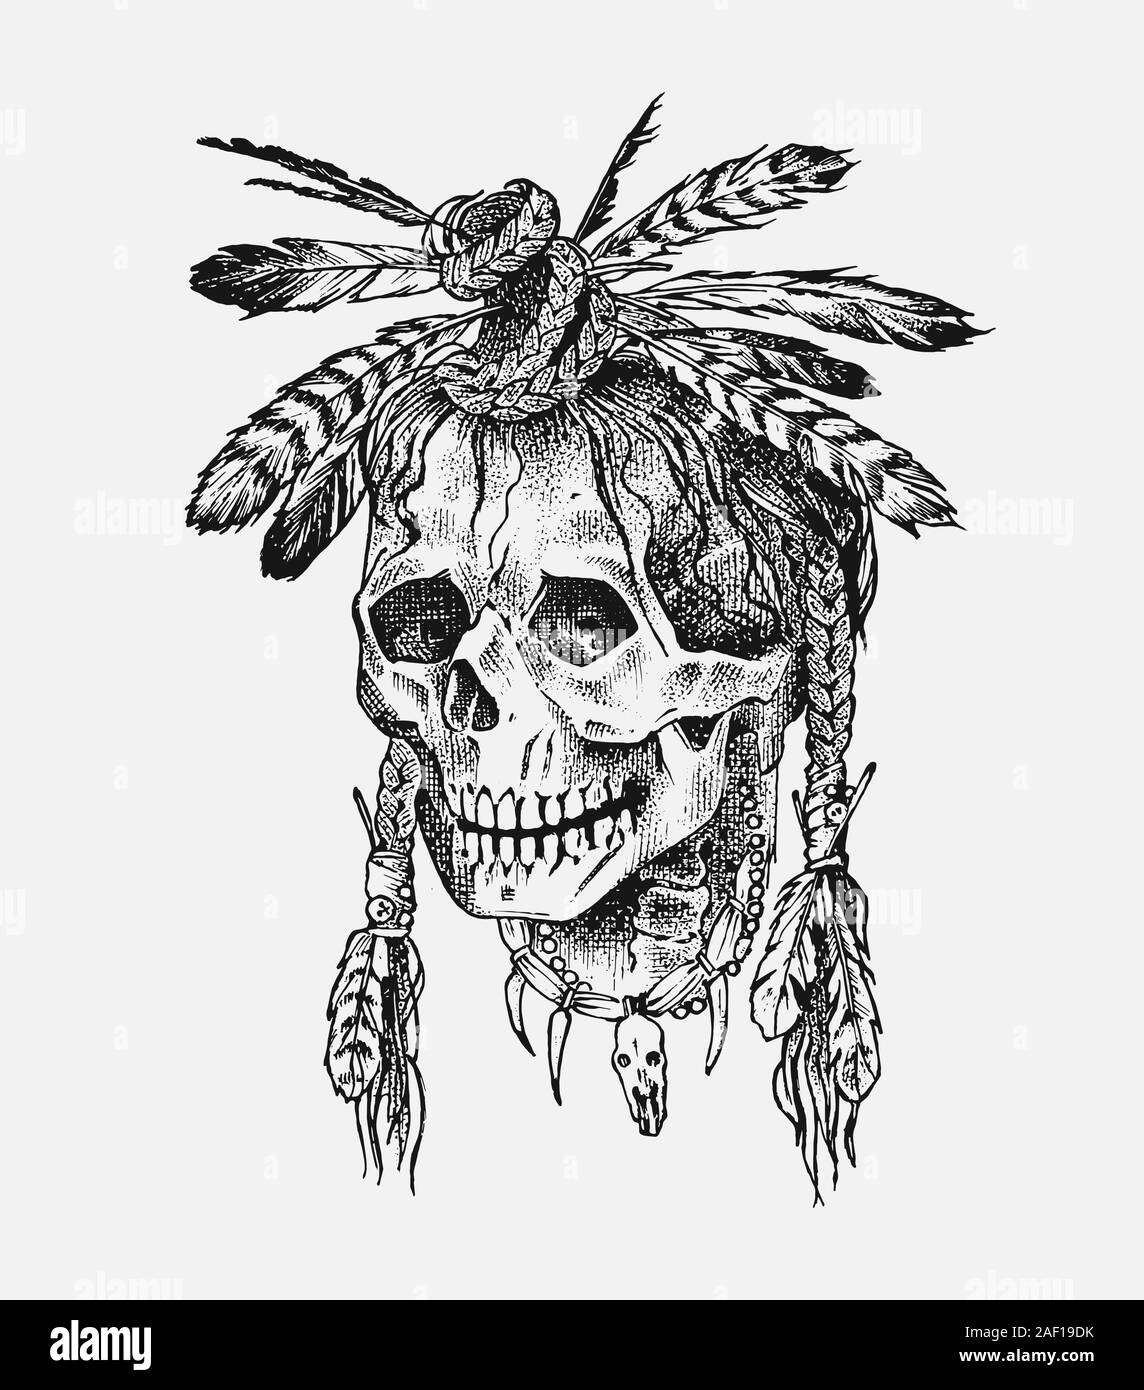 4527 Tattoo Design Skull Feather Images Stock Photos  Vectors   Shutterstock